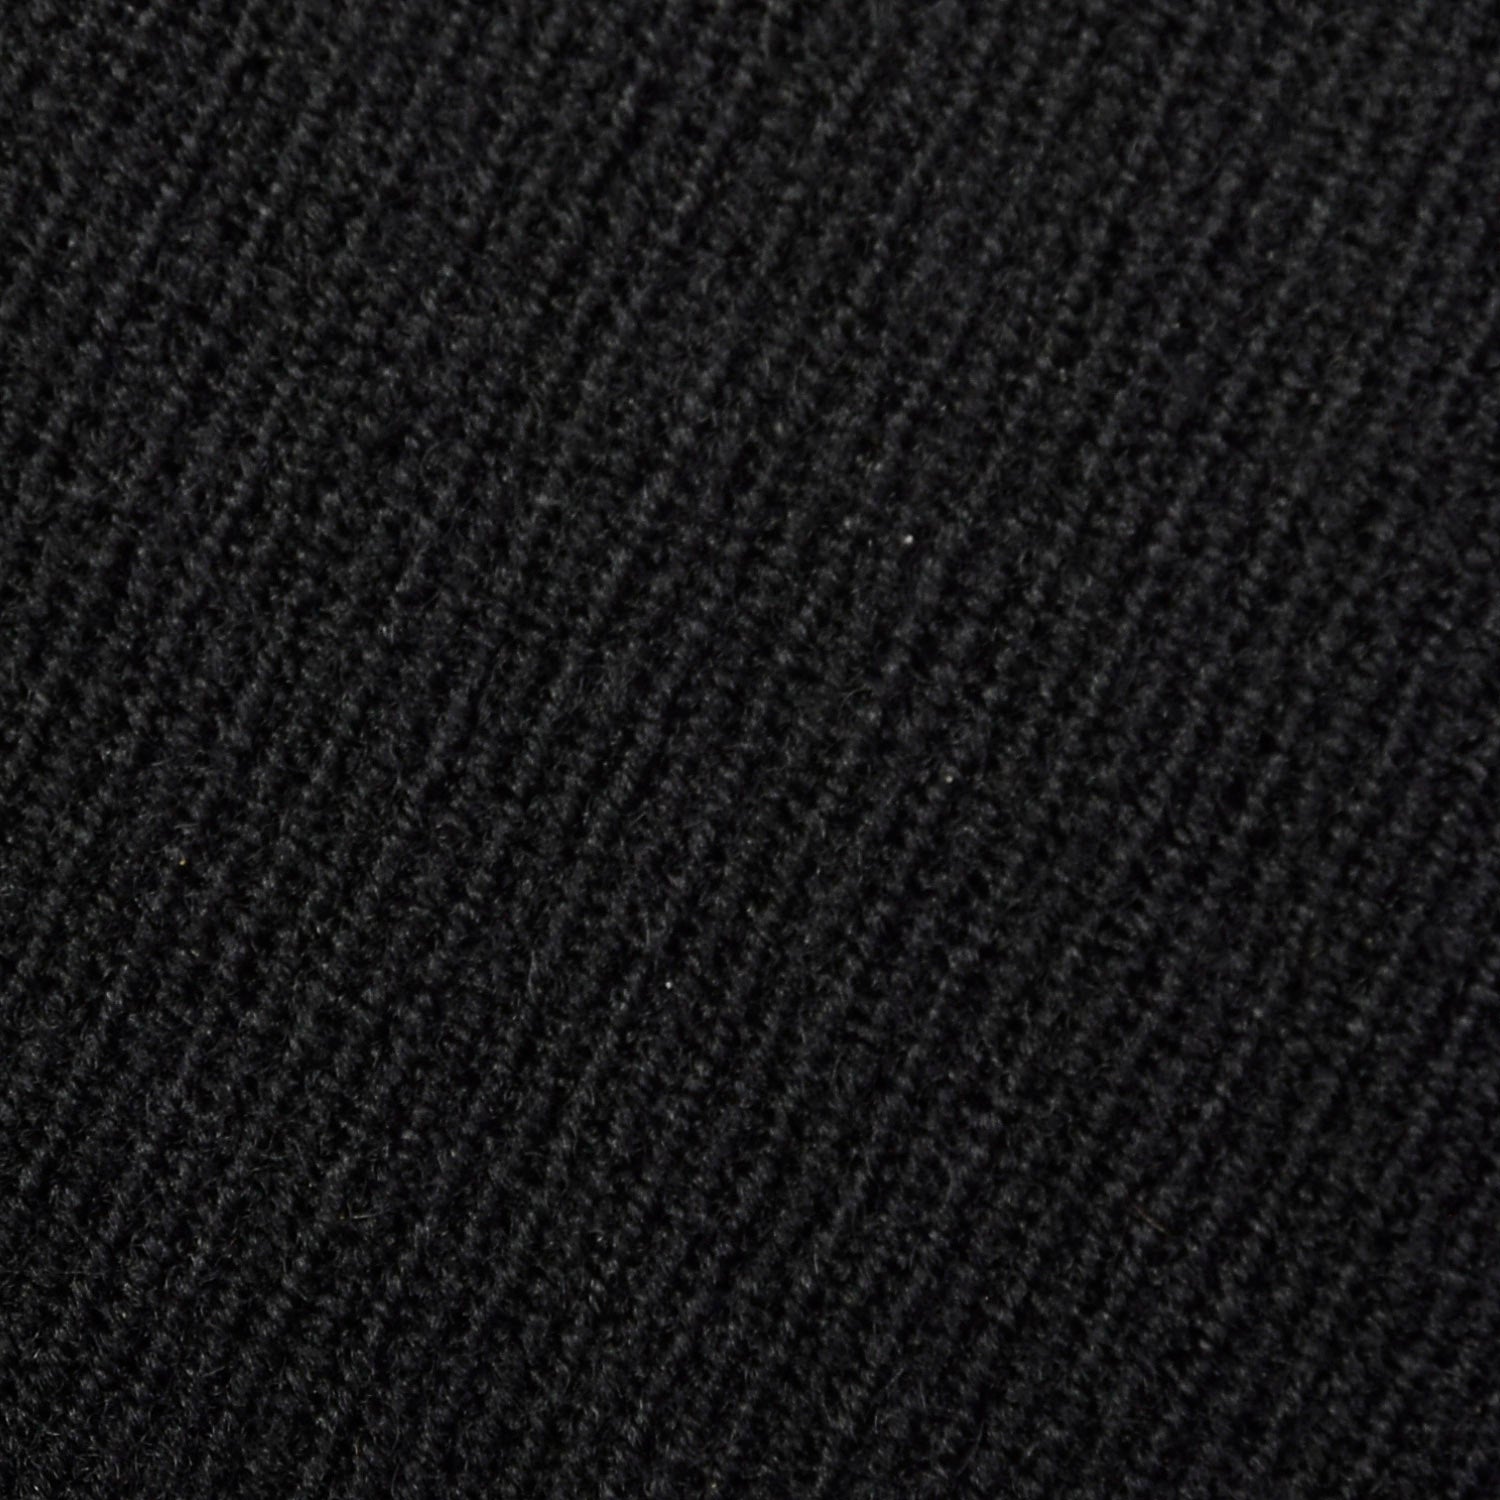 XXS 1960s Double-Breasted Black Wool Coat